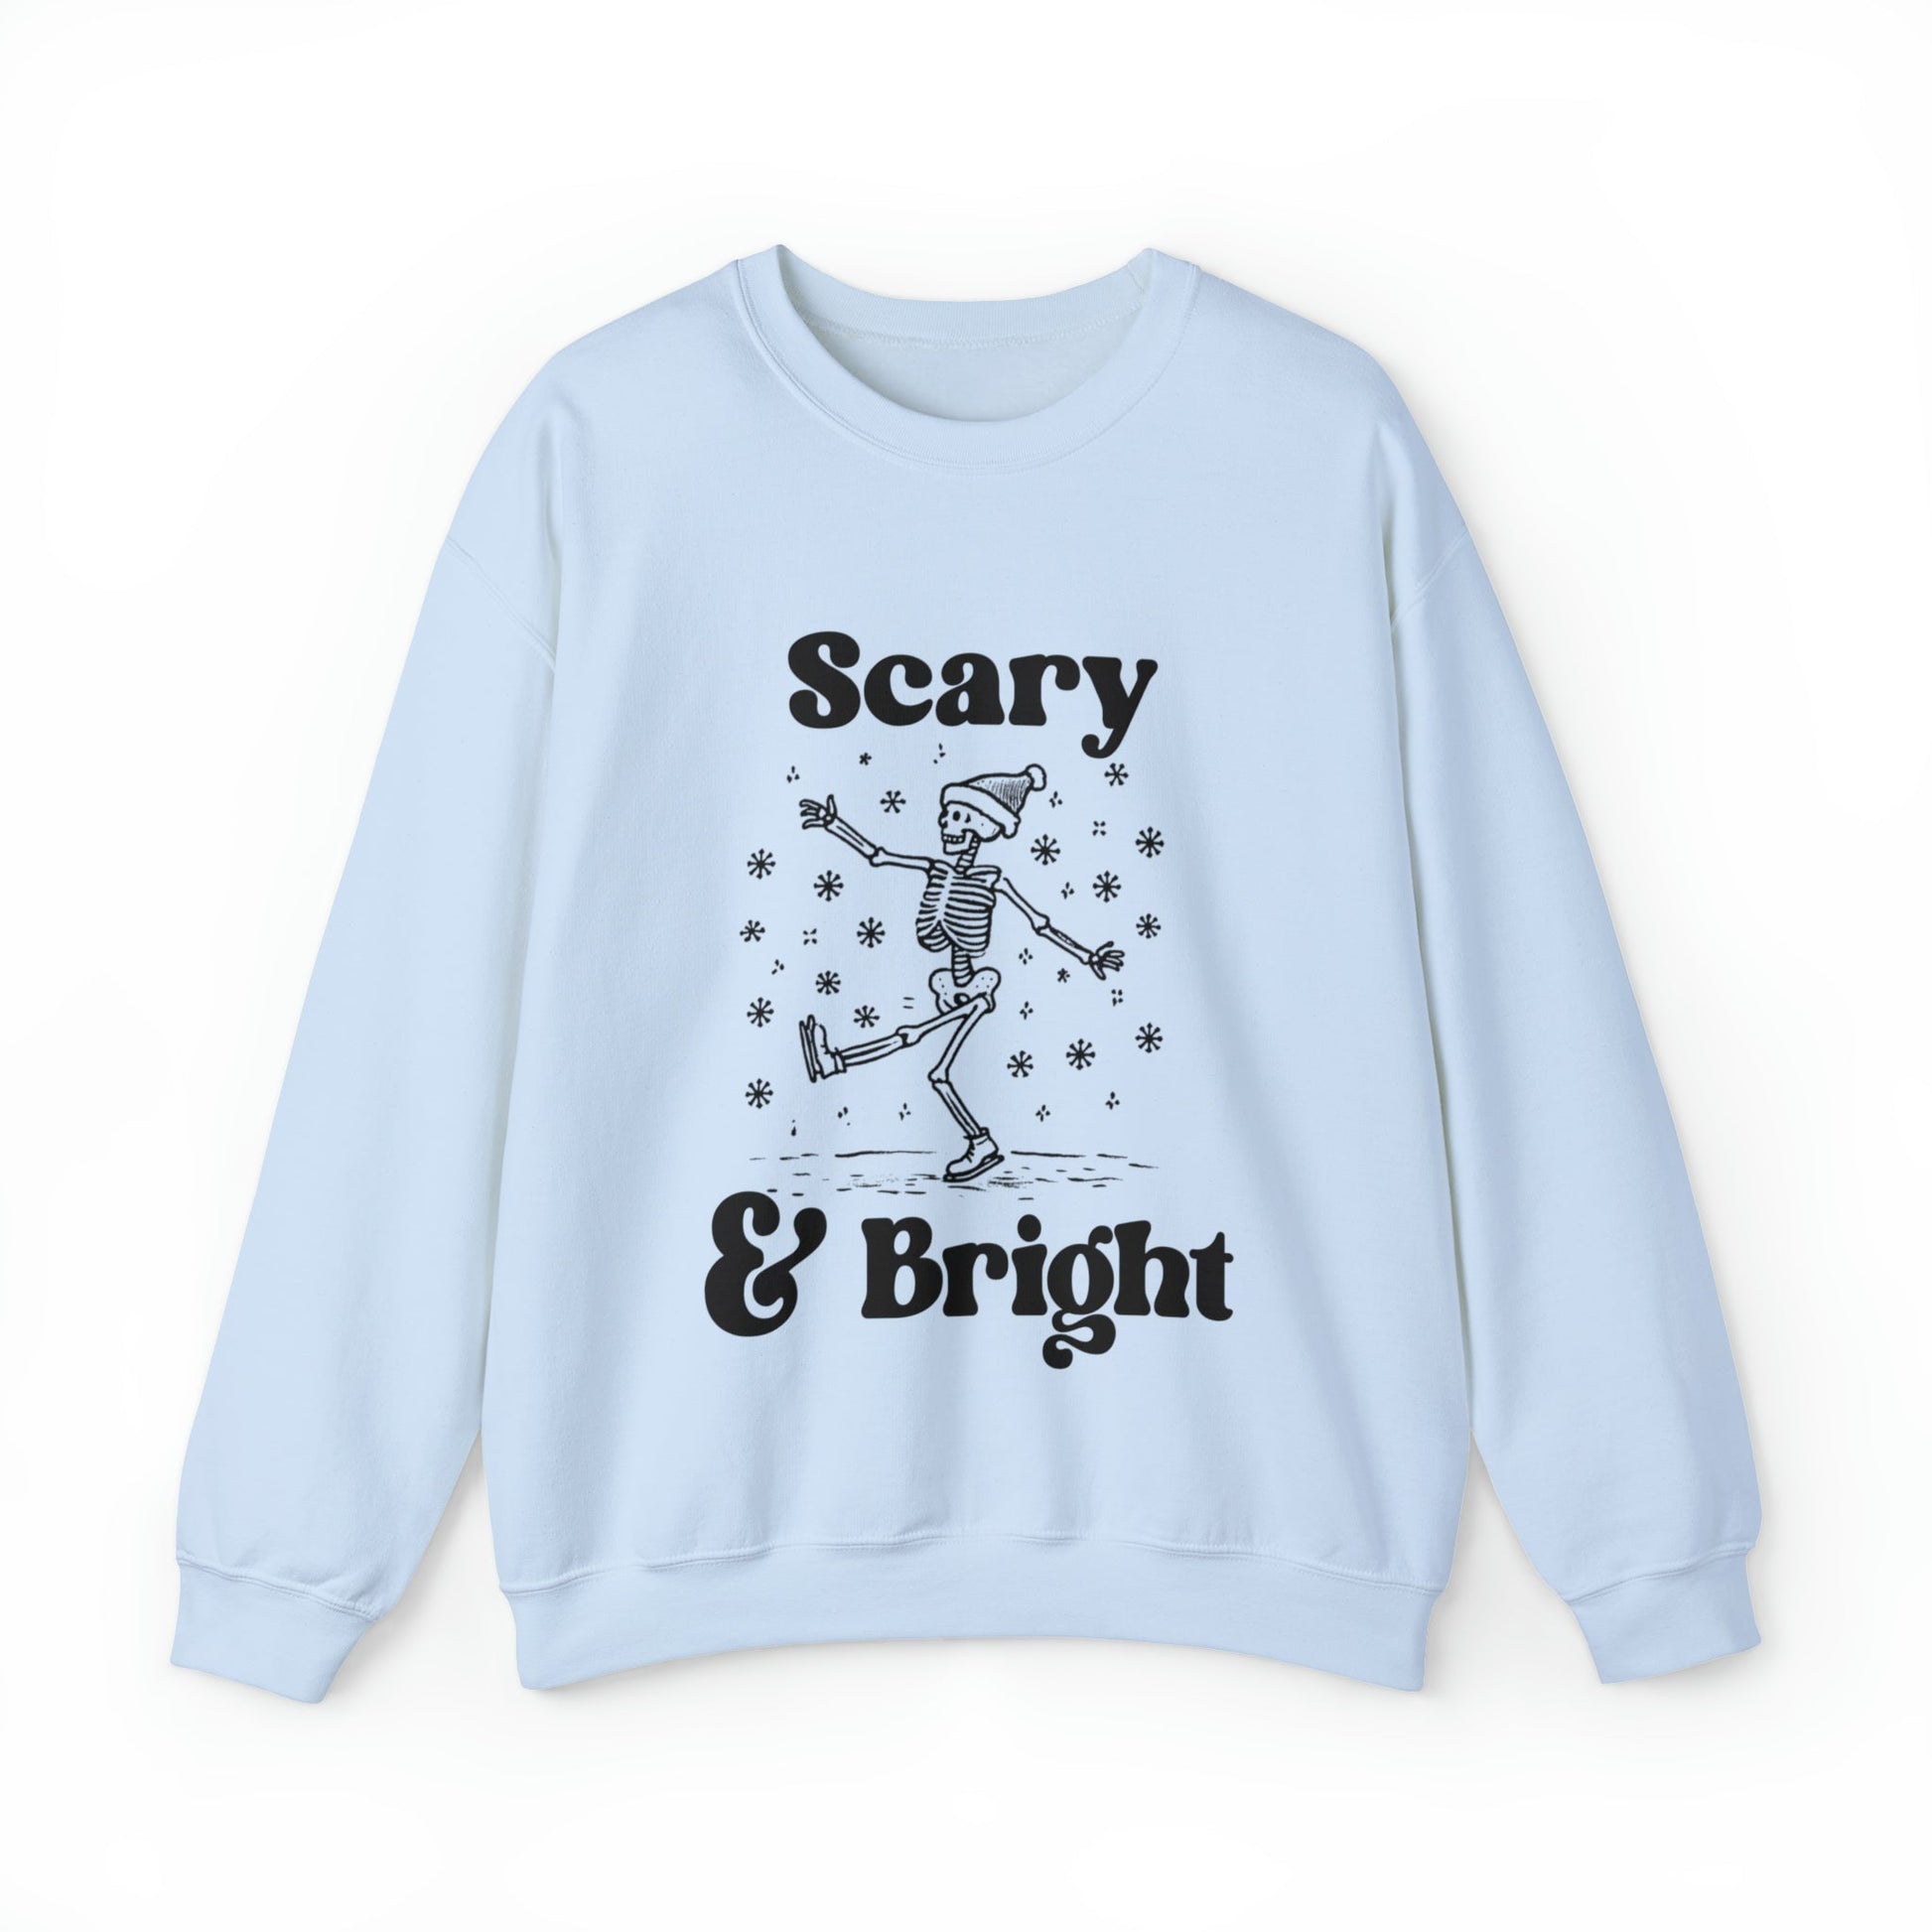 Scary and Bright Pullover Crewneck SweatshirtSweatshirtVTZdesignsSLight BluechristmasclothingCrew neck